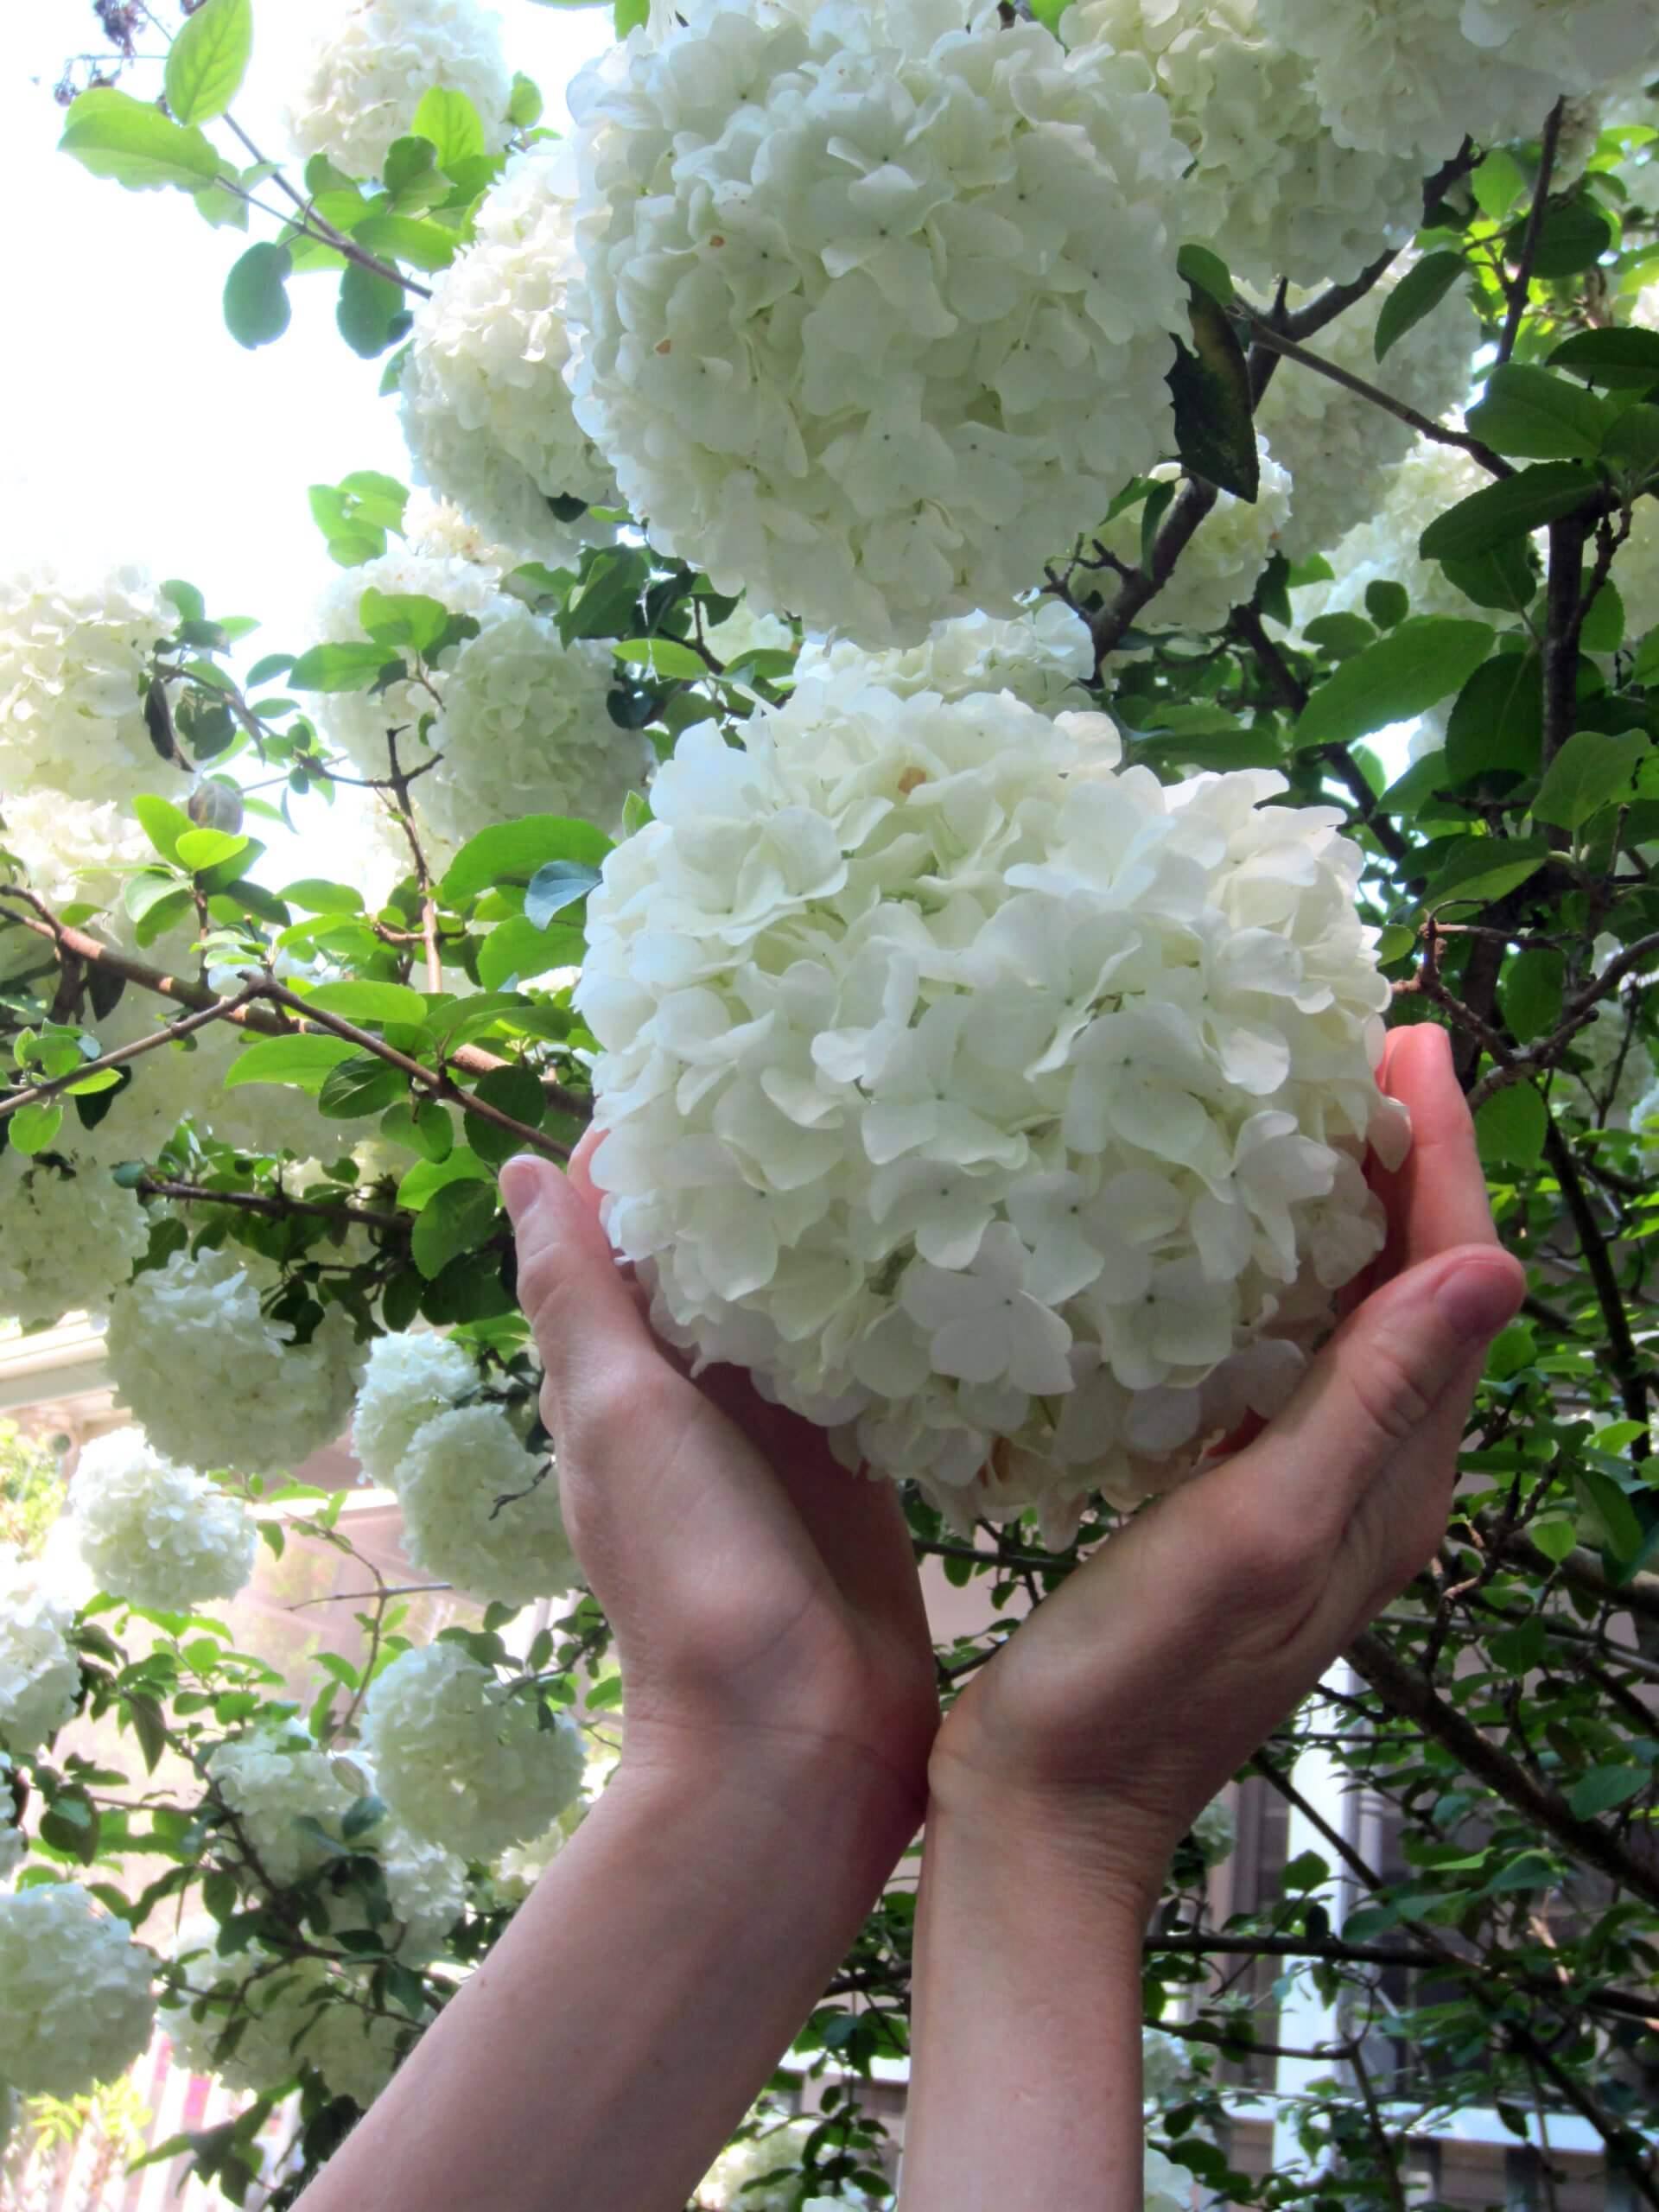 Chinese snowball (Viburnum macrocephalum) flower clusters add drama to the spring garden.